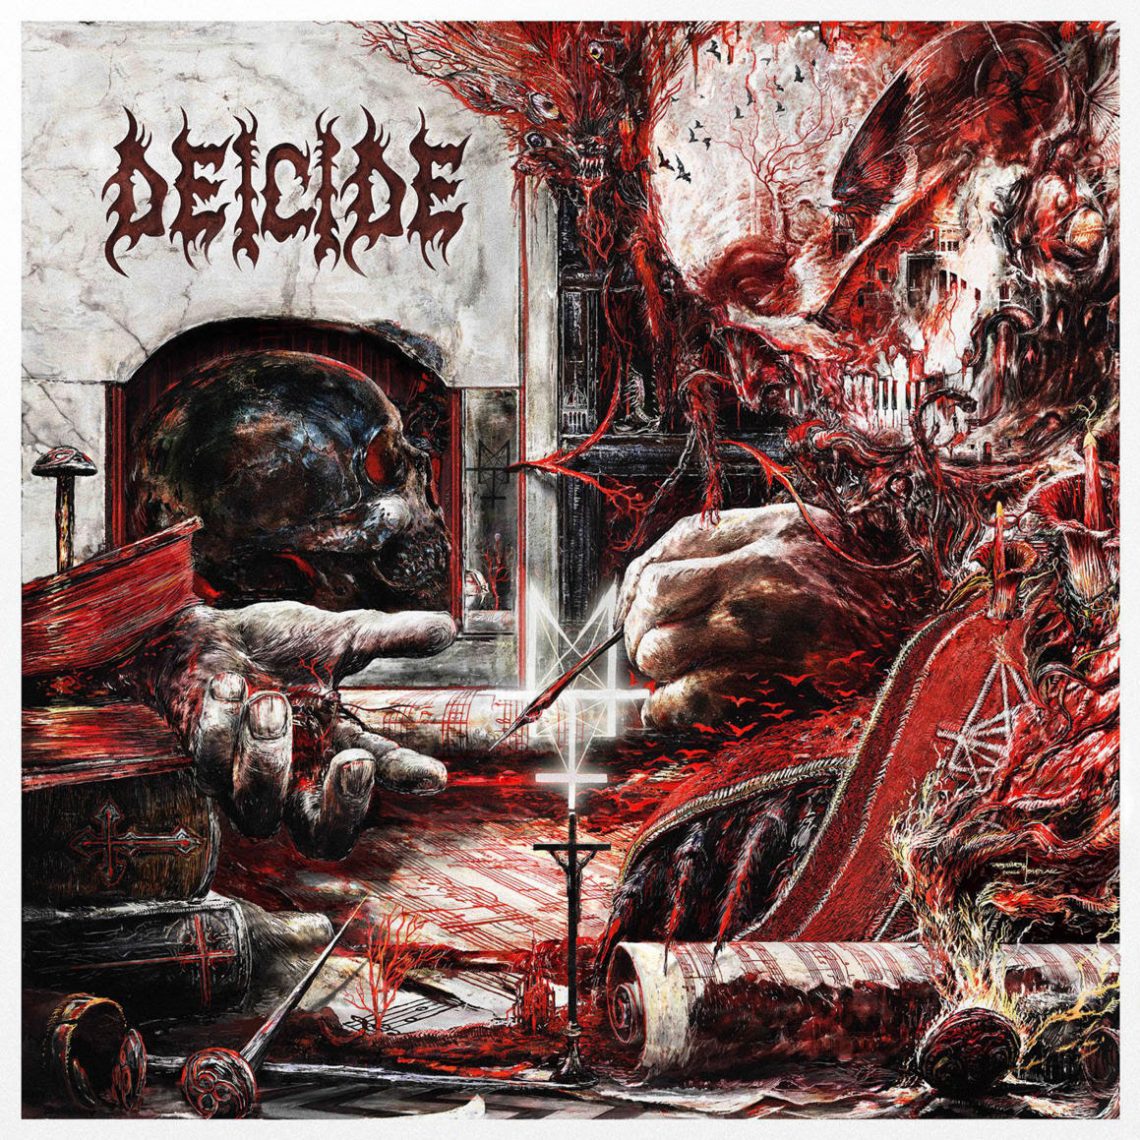 DEICIDE announce new album “Overtures Of Blasphemy” for September release